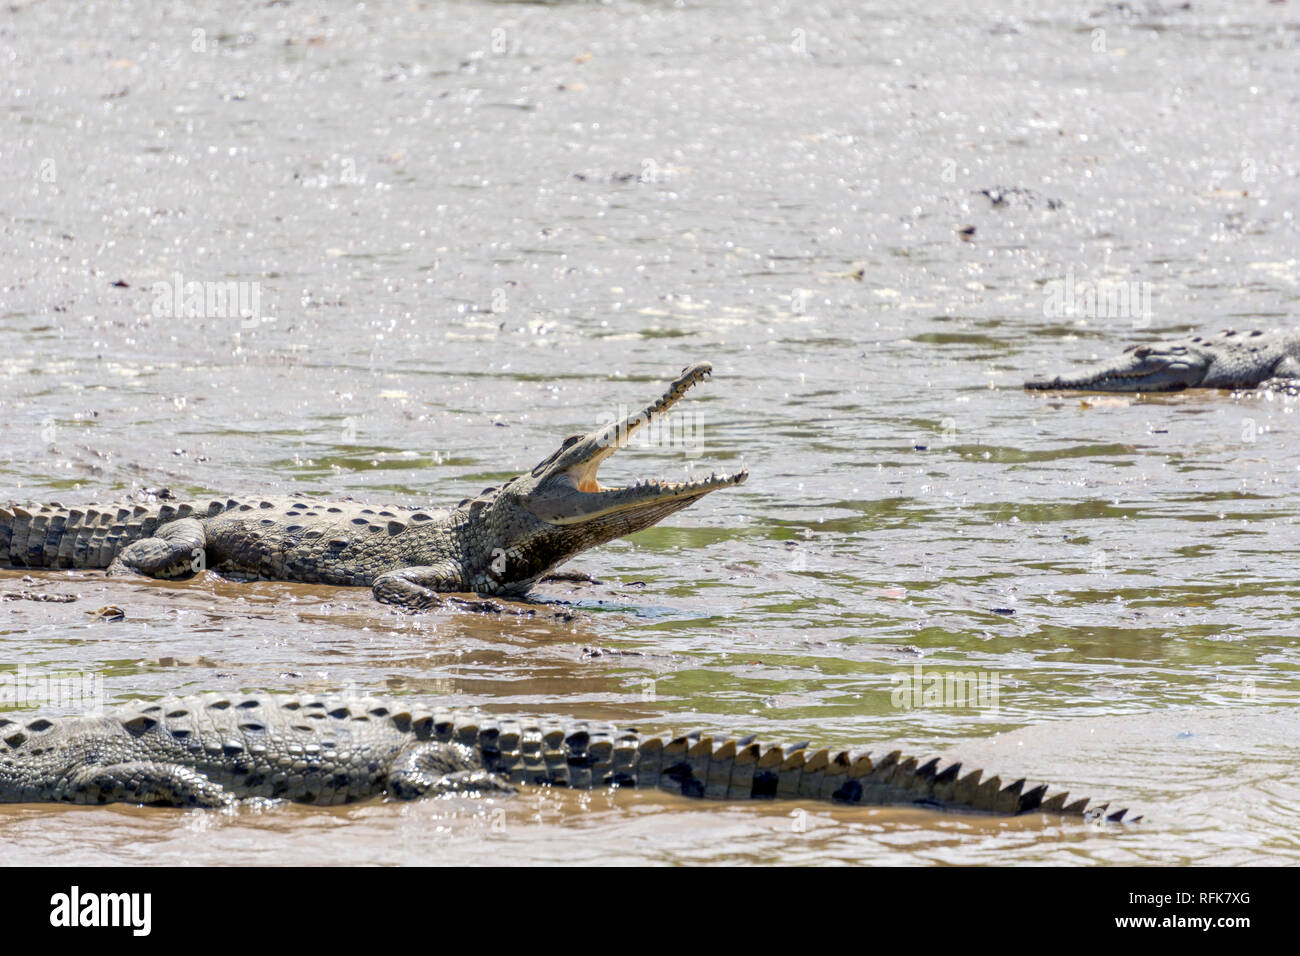 Wild Crocodiles Sunbathe in the Tarcoles River, Puntarenas, Costa Rica Stock Photo